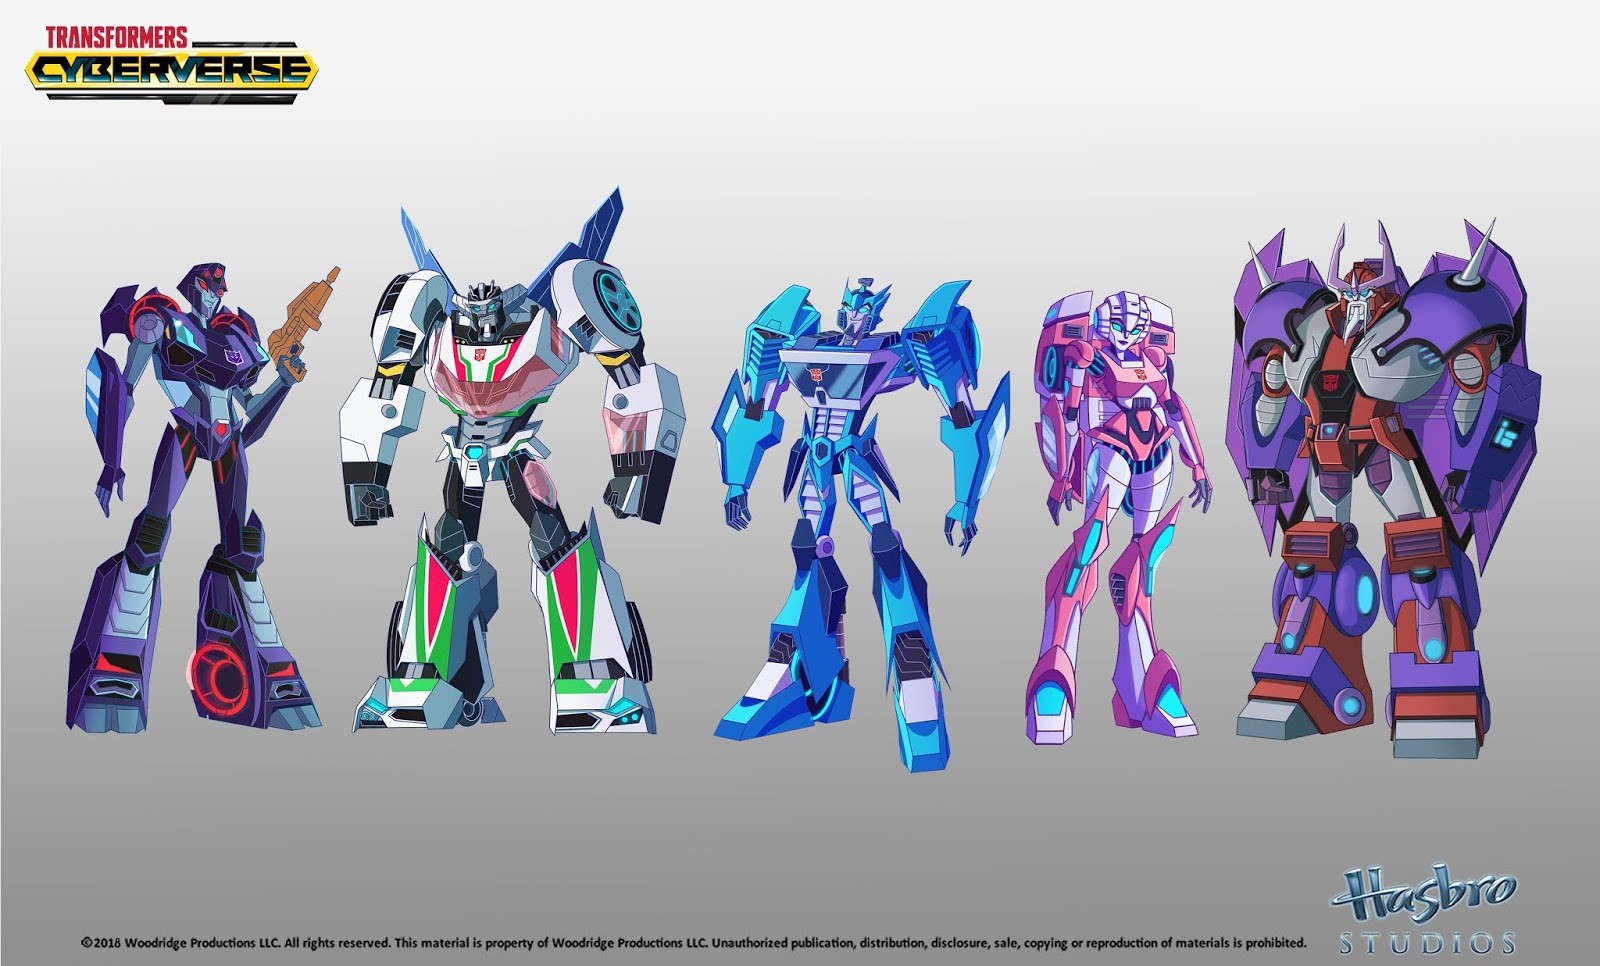 Transformers News: New Transformers Cyberverse Concept Art